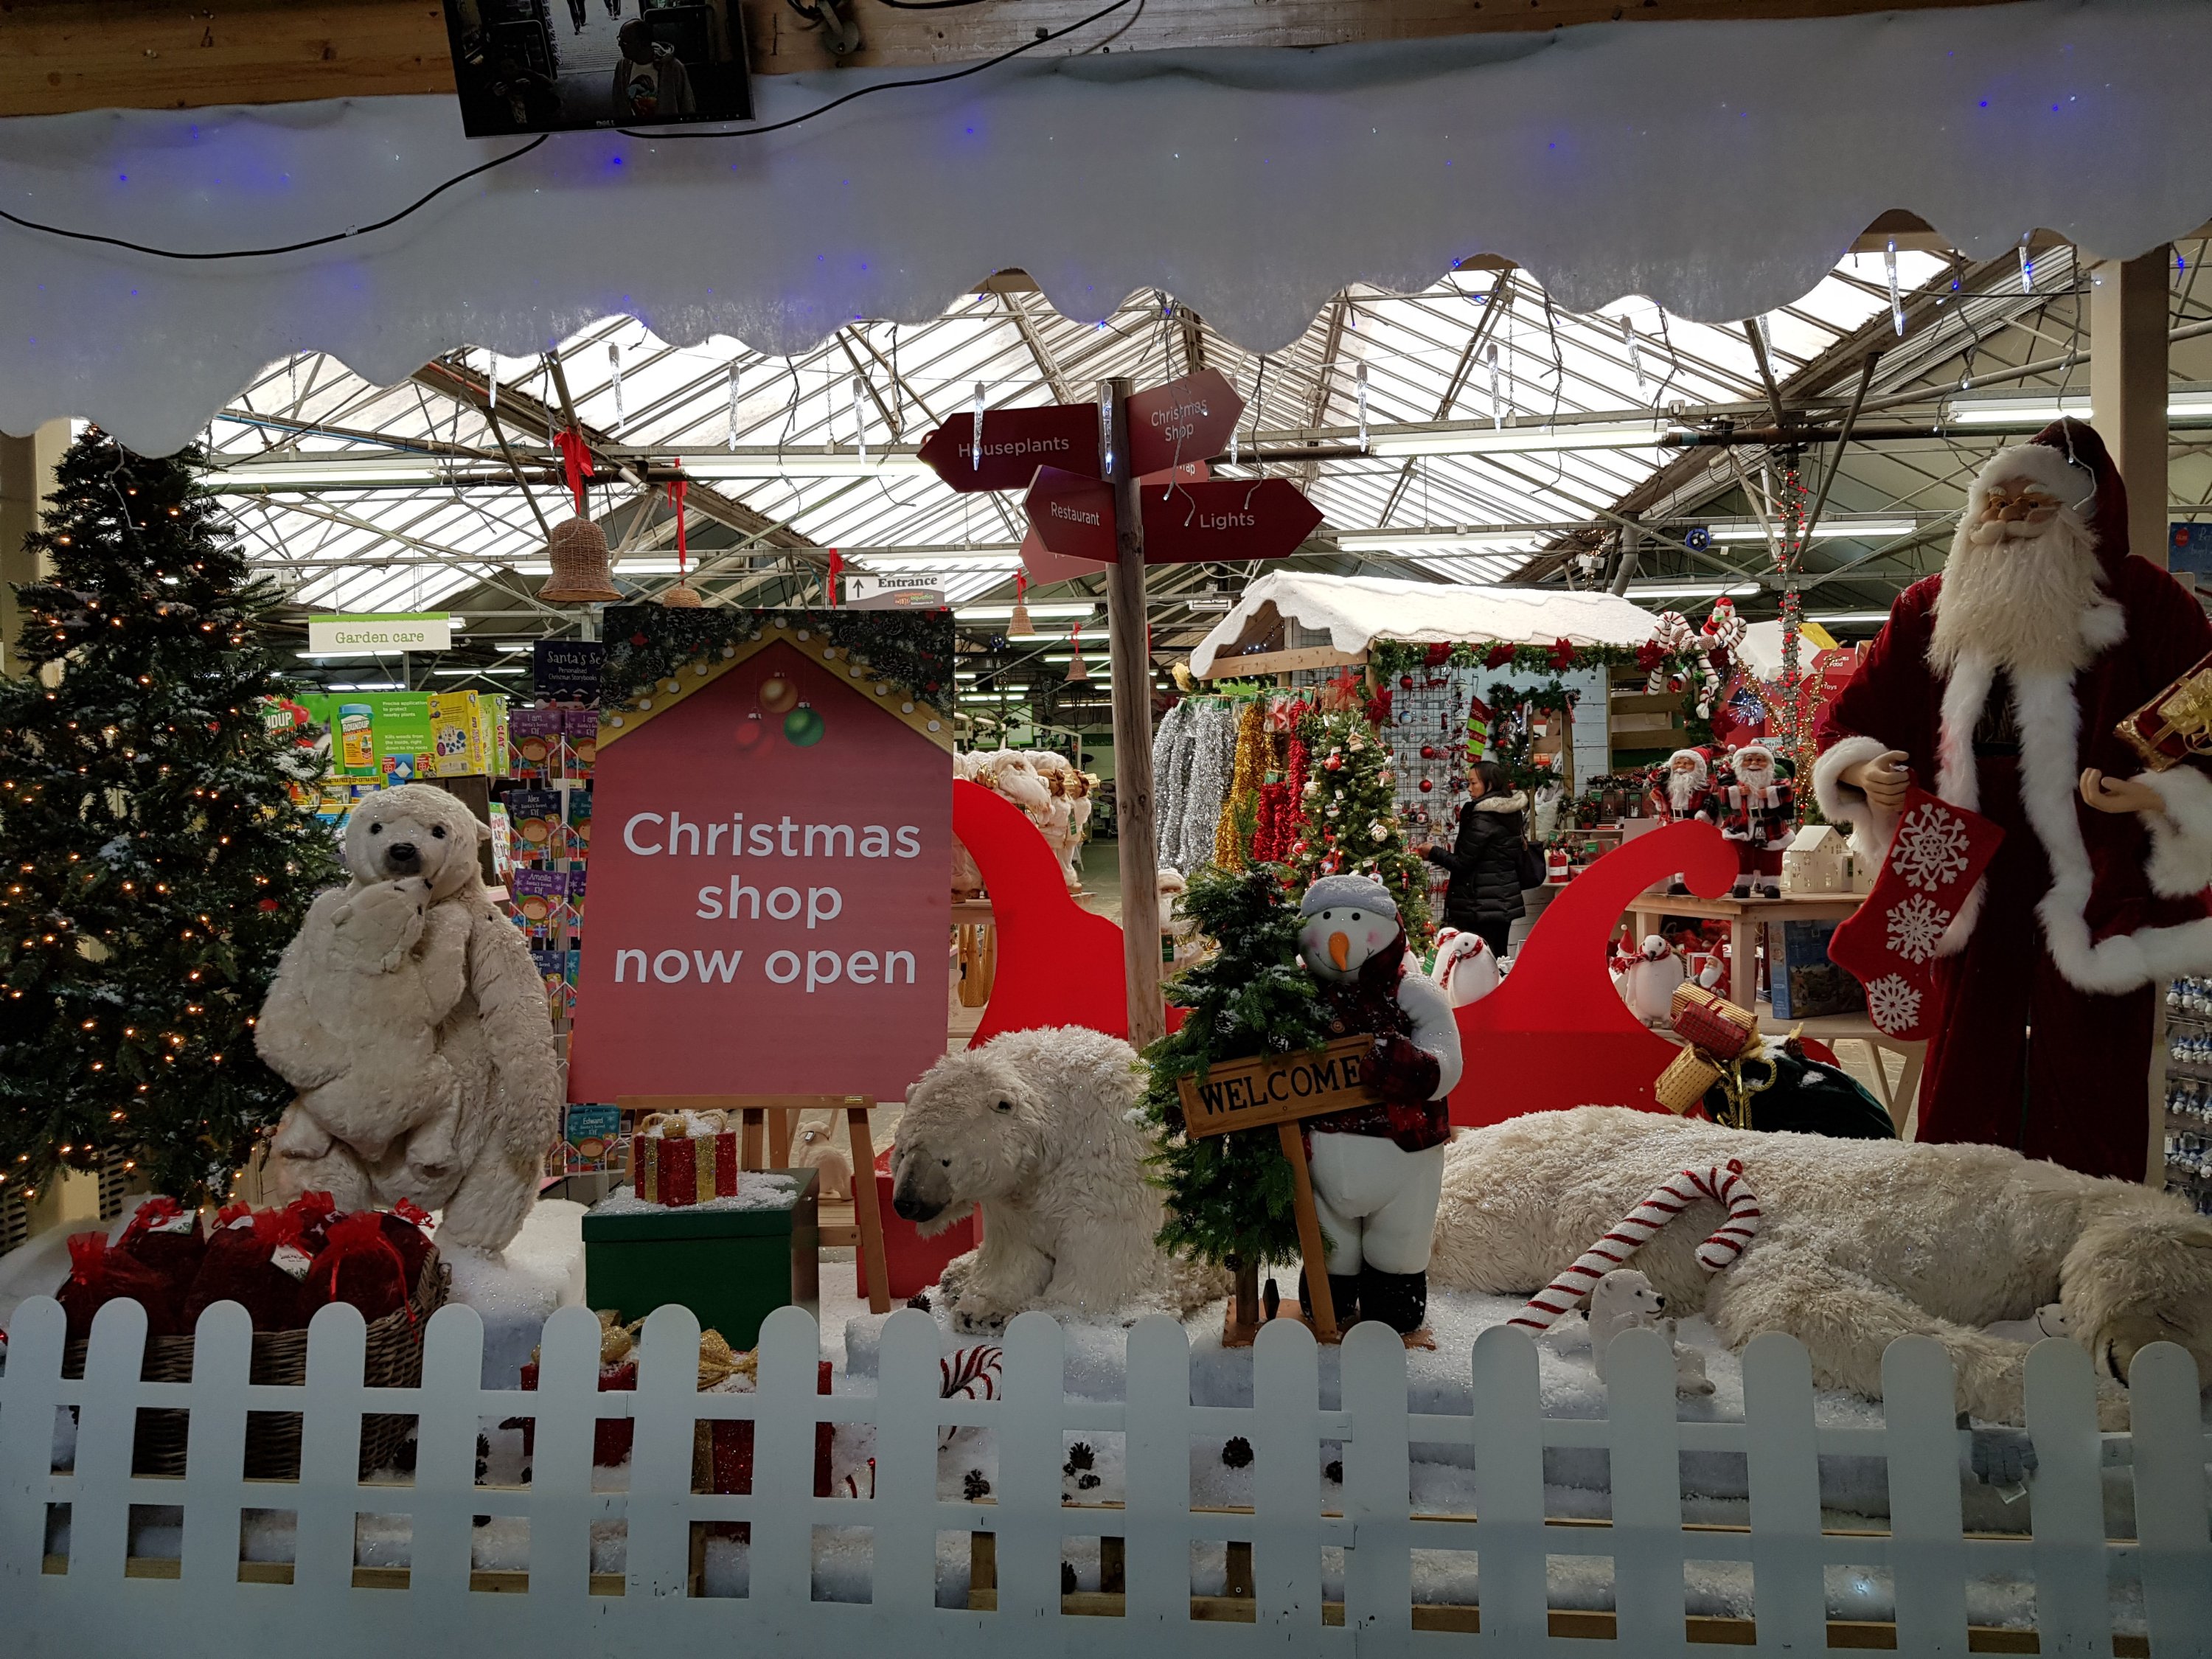 A Christmas display at Crews Hill, Enfield